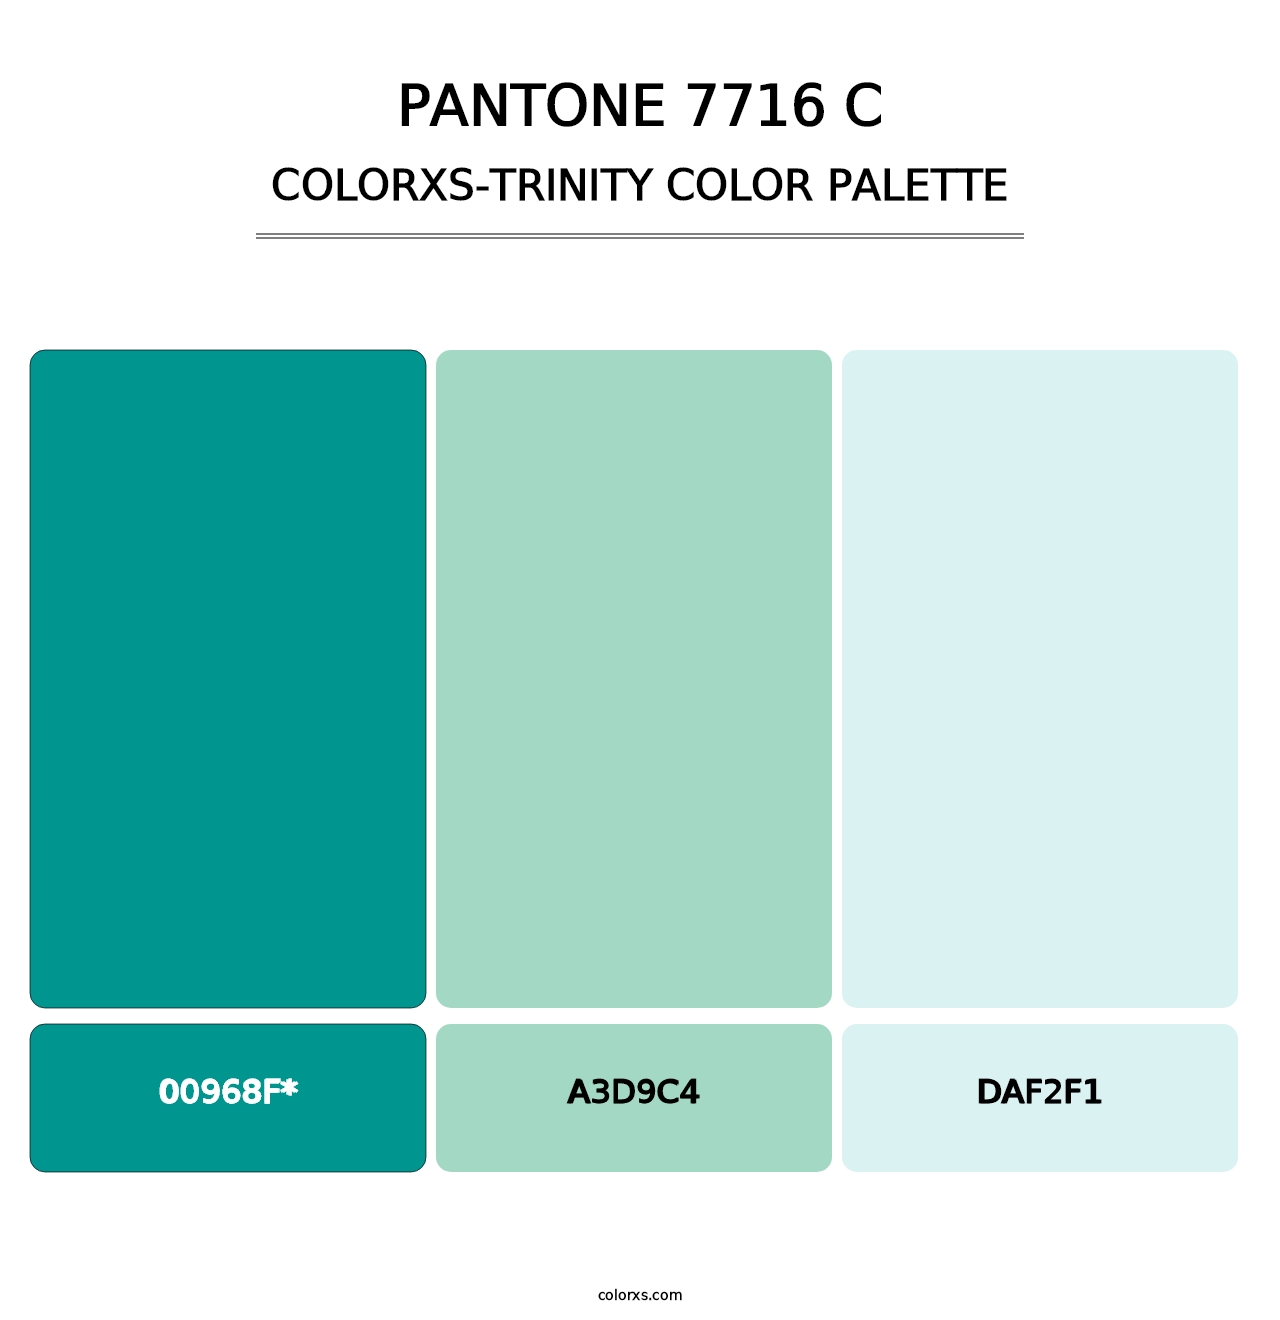 PANTONE 7716 C - Colorxs Trinity Palette